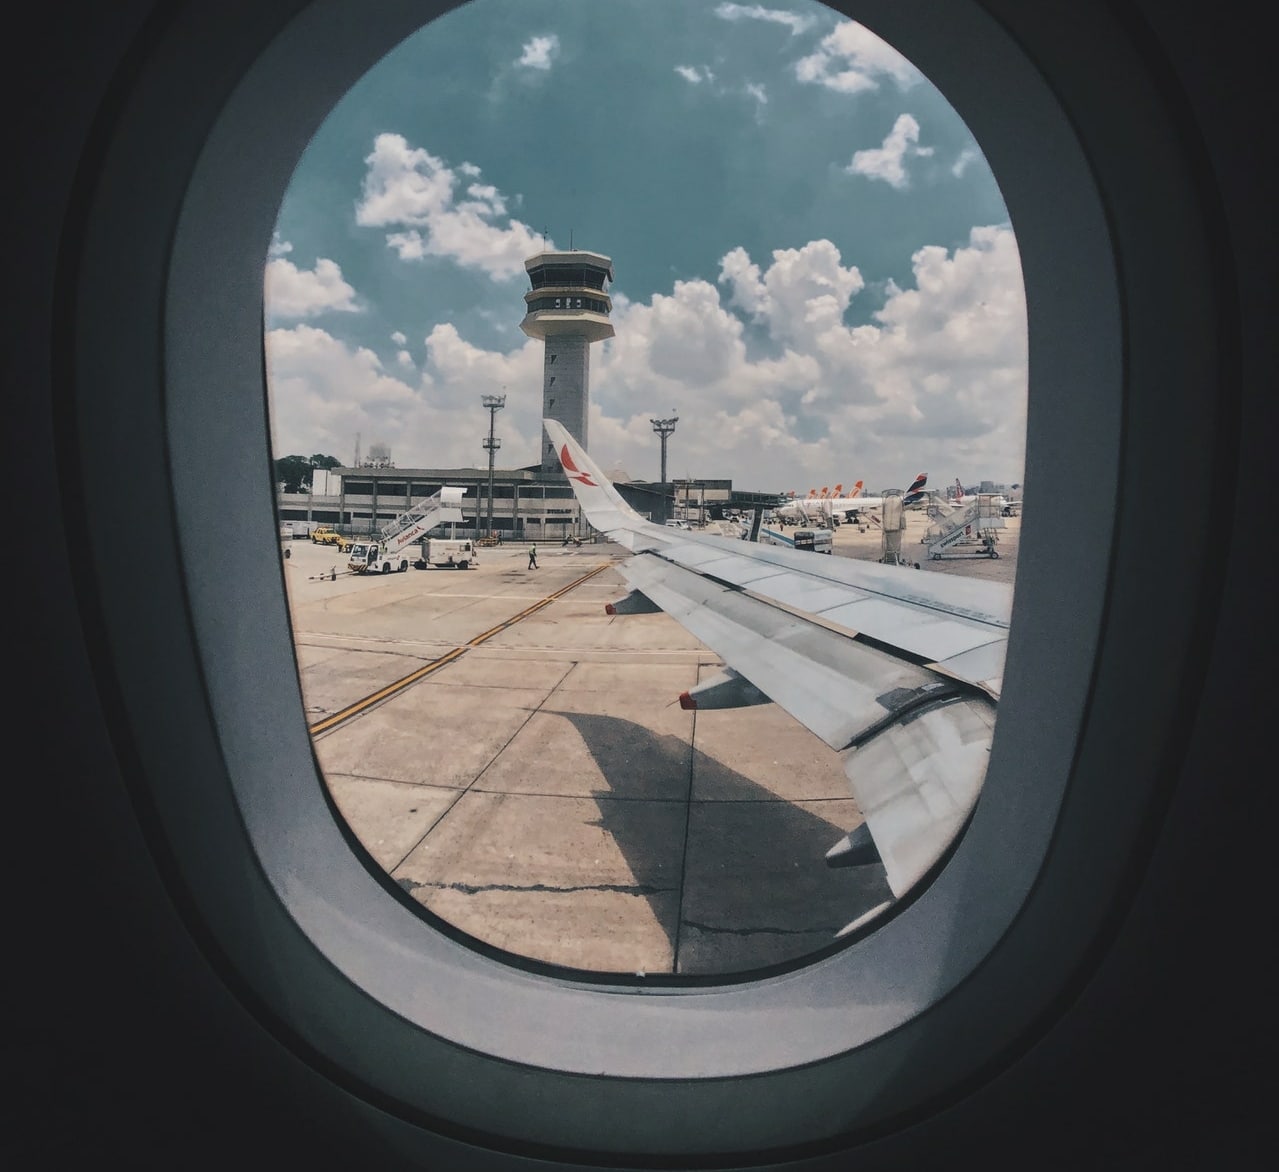 snapshot through a plane window